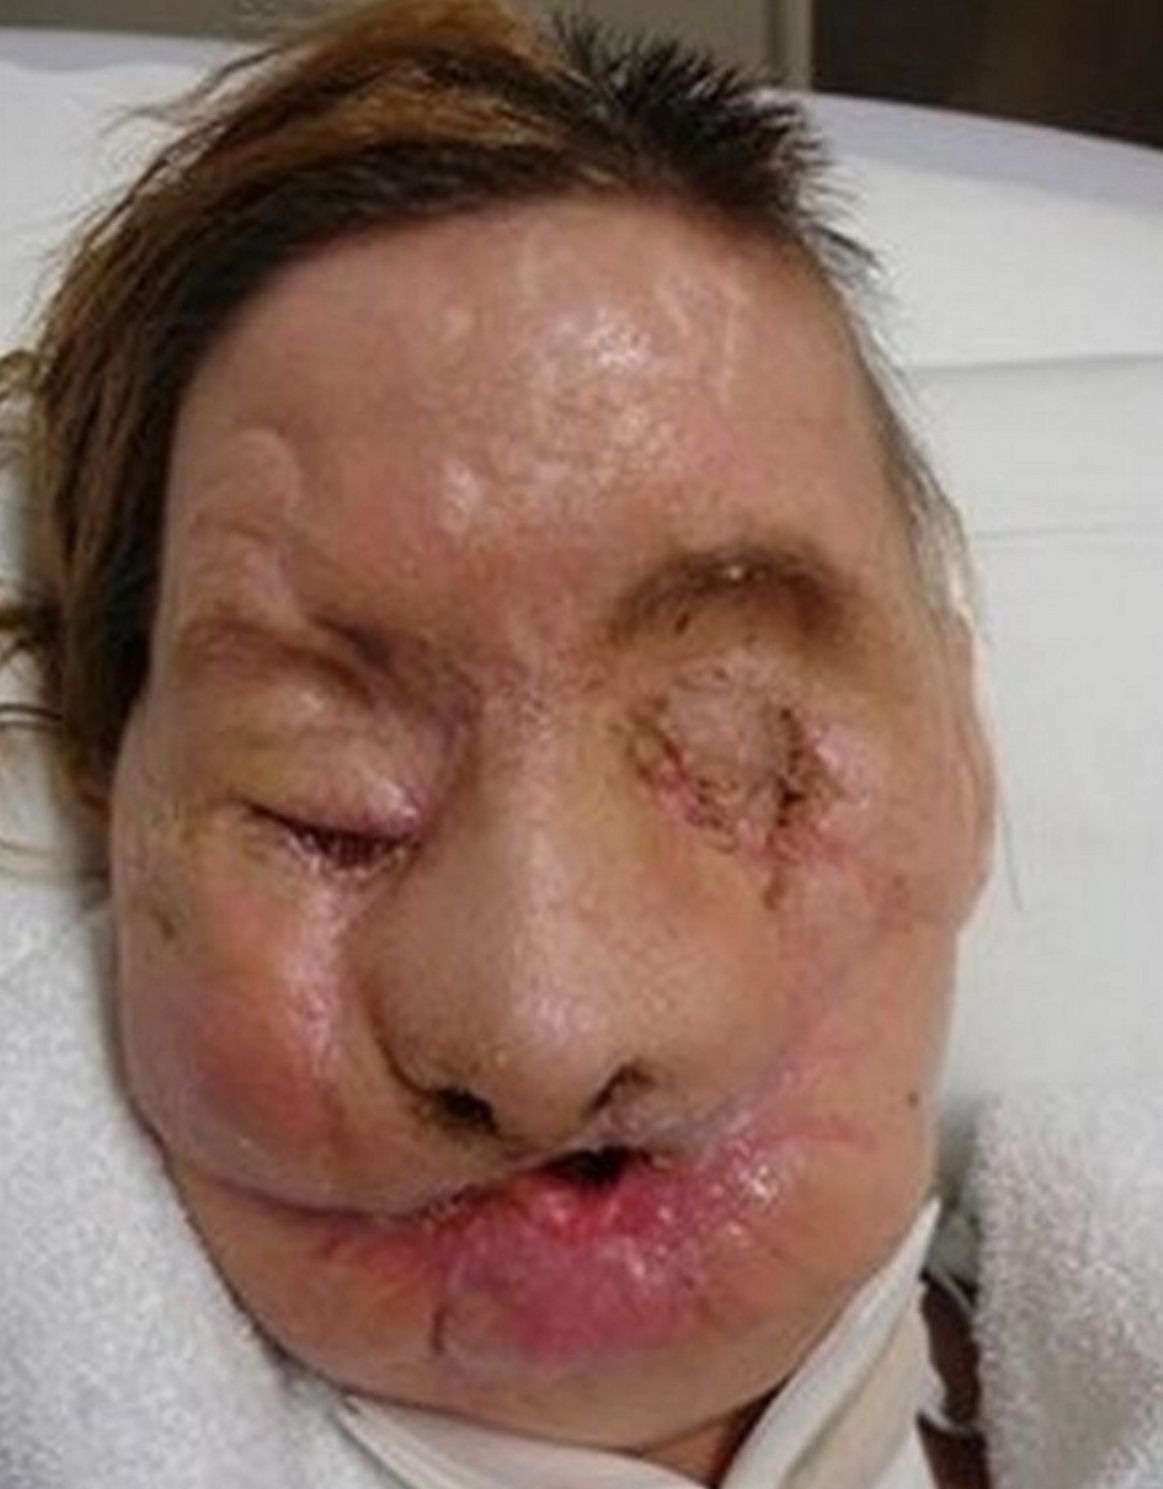 Korban menjalani transplantasi wajah dua tahun setelah serangan itu.  